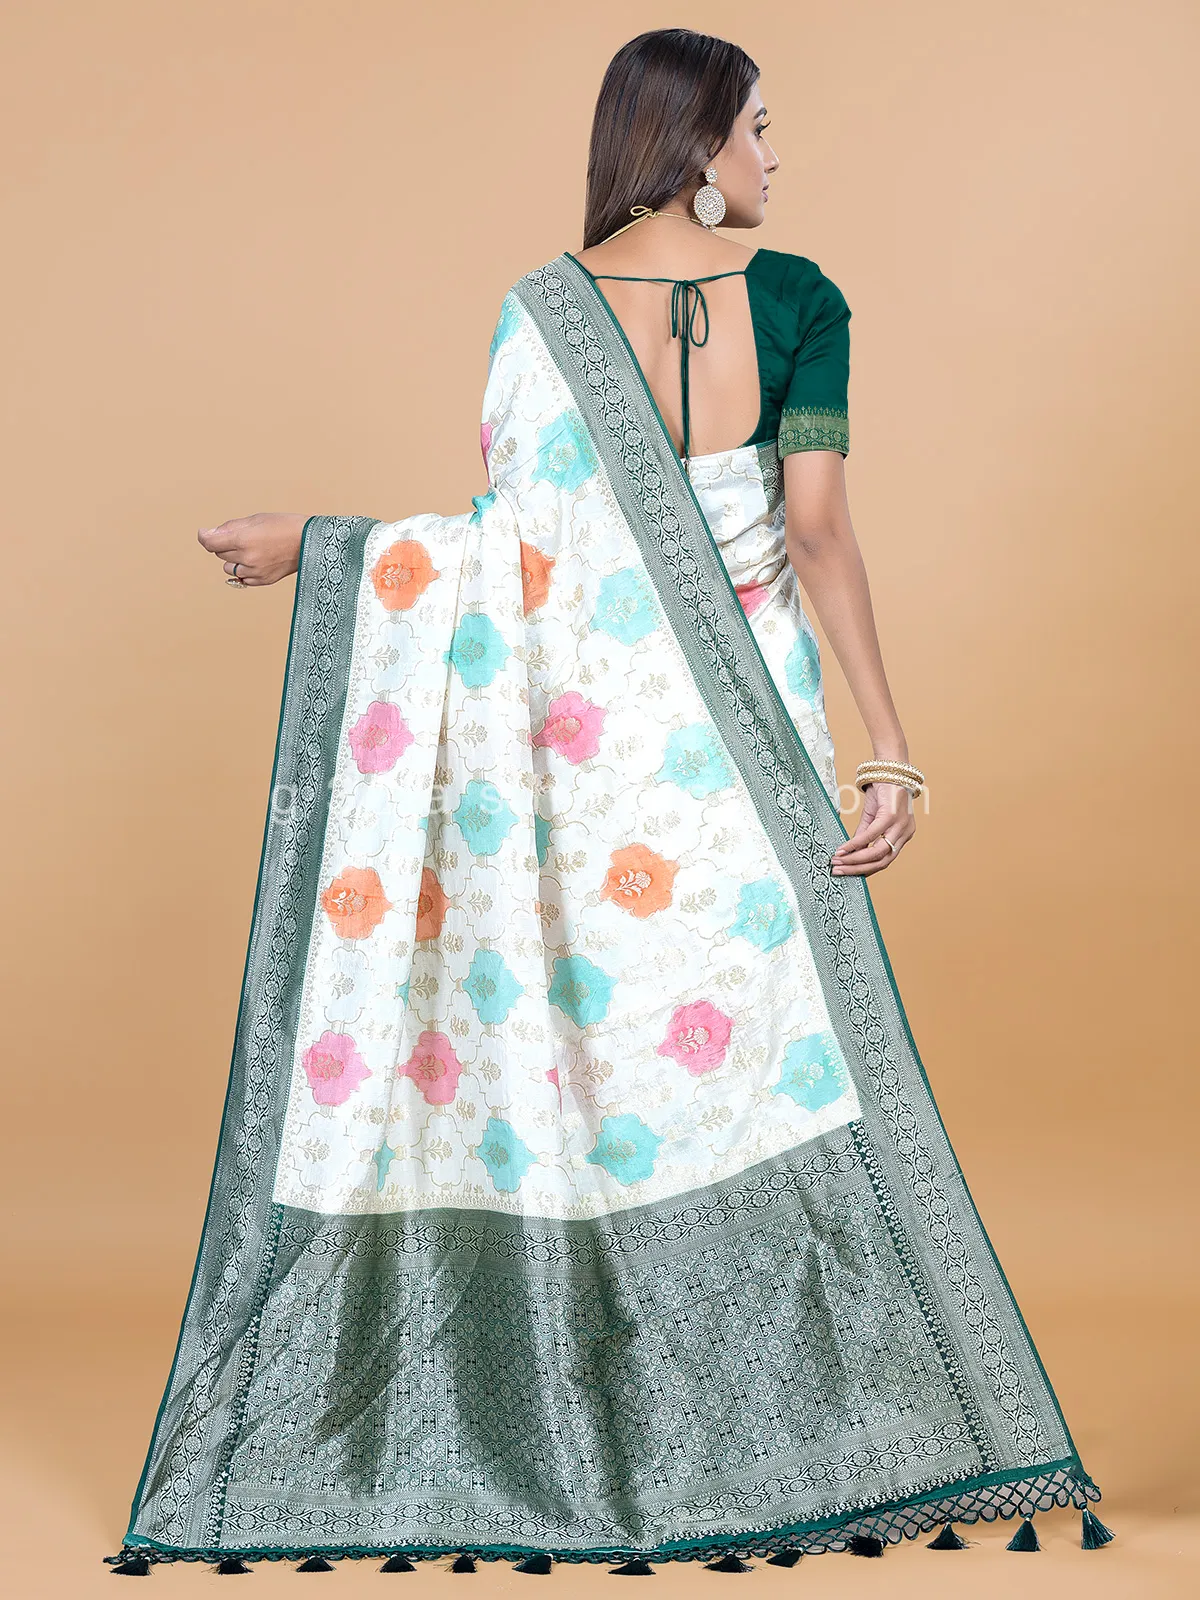 Trendy off white silk printed saree for wedding wear